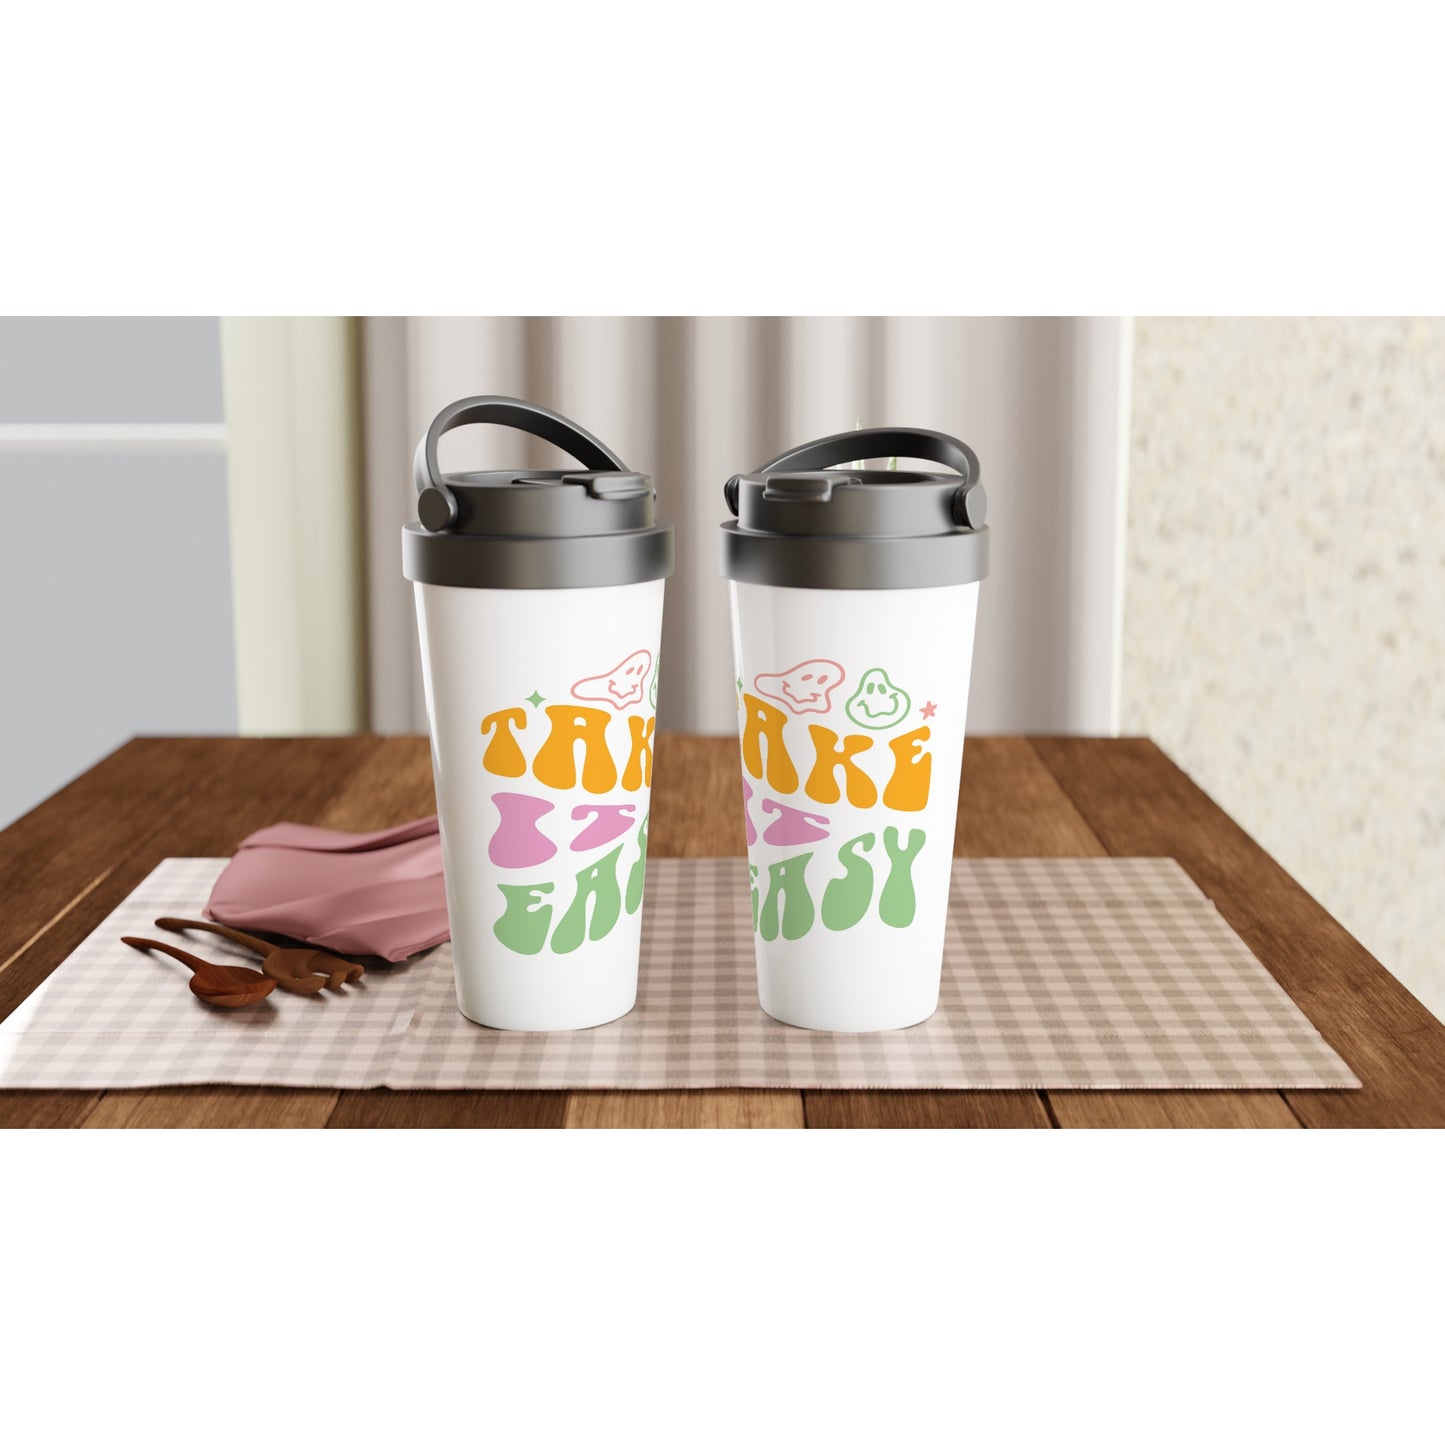 Take It Easy - White 15oz Stainless Steel Travel Mug